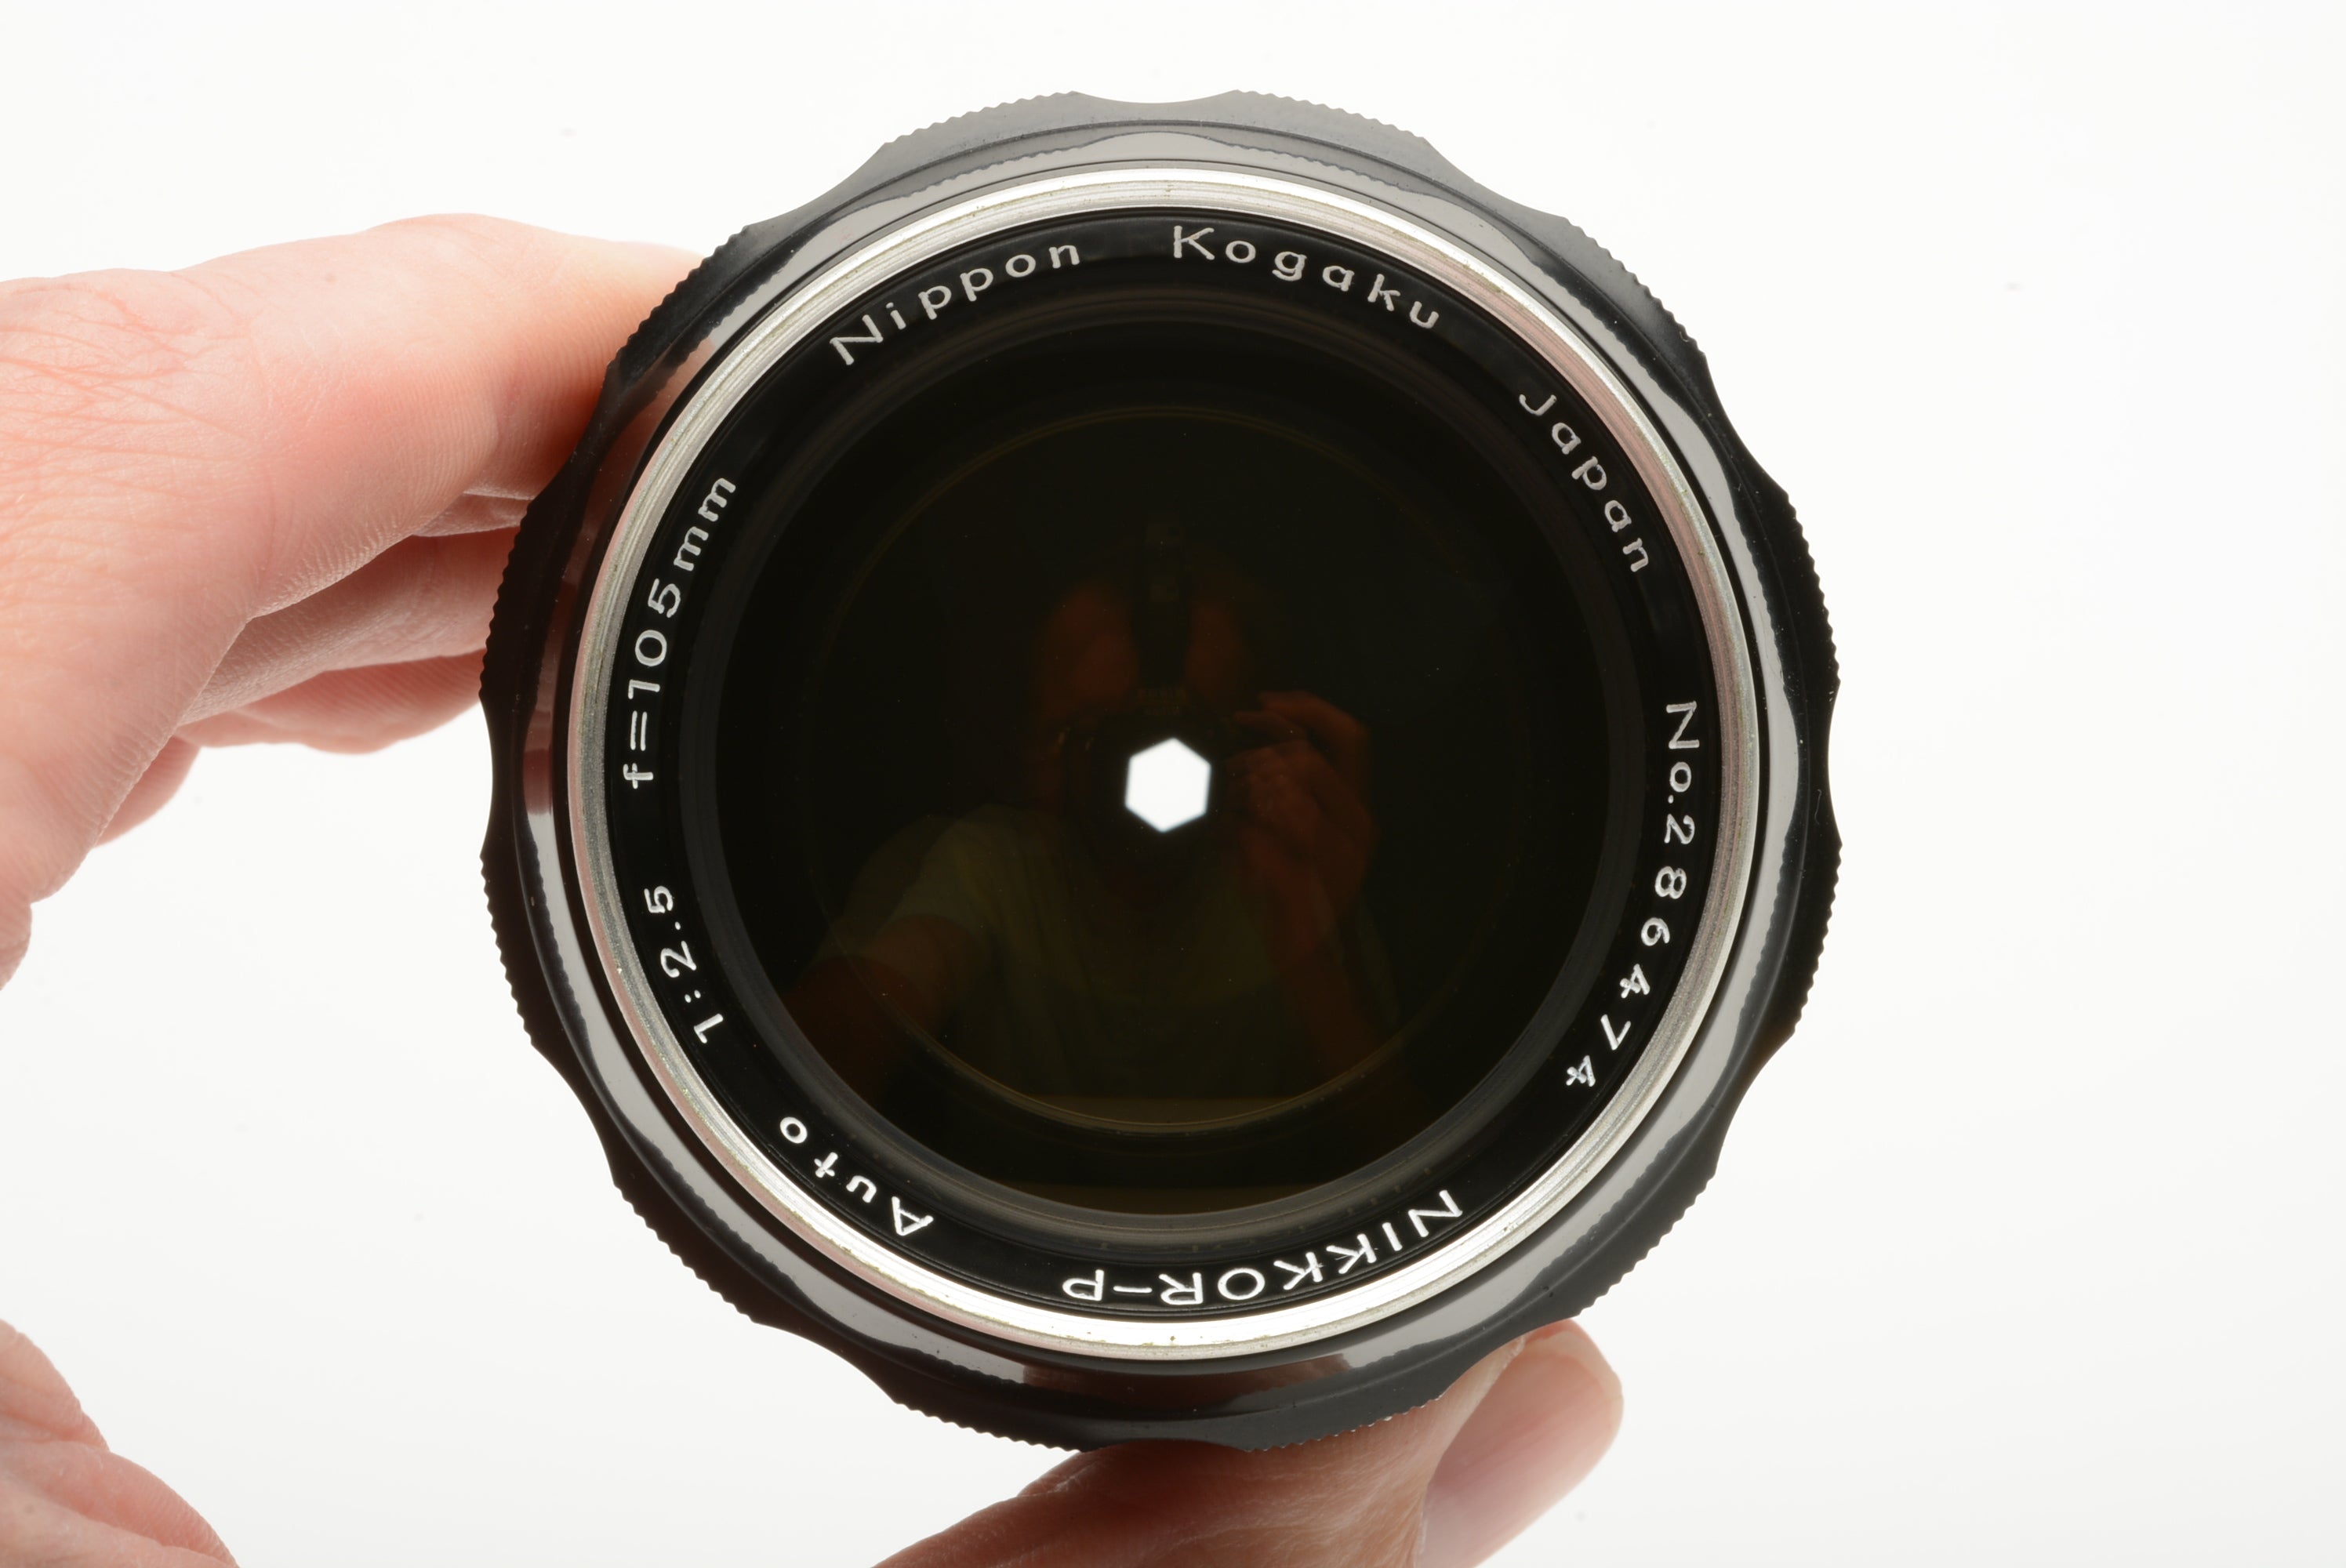 Nikon Nikkor-P 105mm f2.5 Non-AI Portrait lens, very clean and